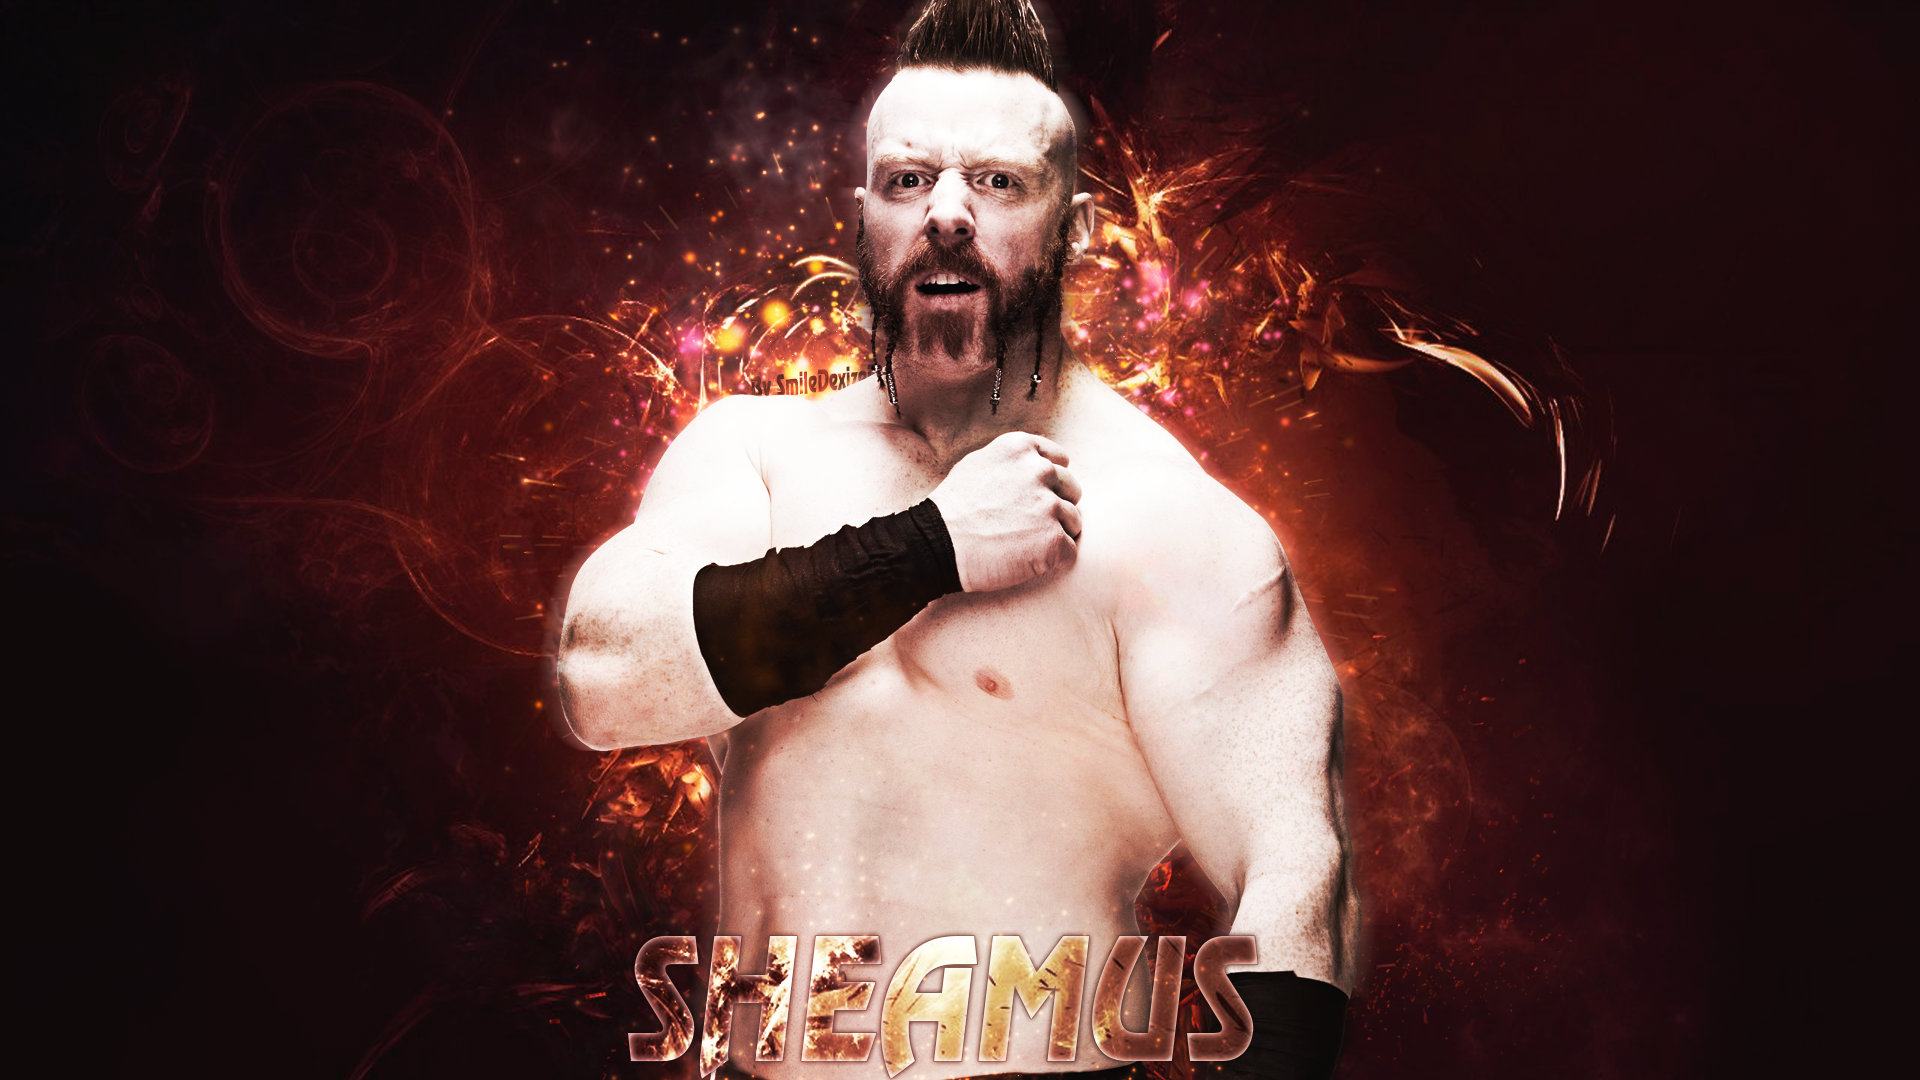 Wwe Wrestler Sheamus Full HD 1080p Wallpaper